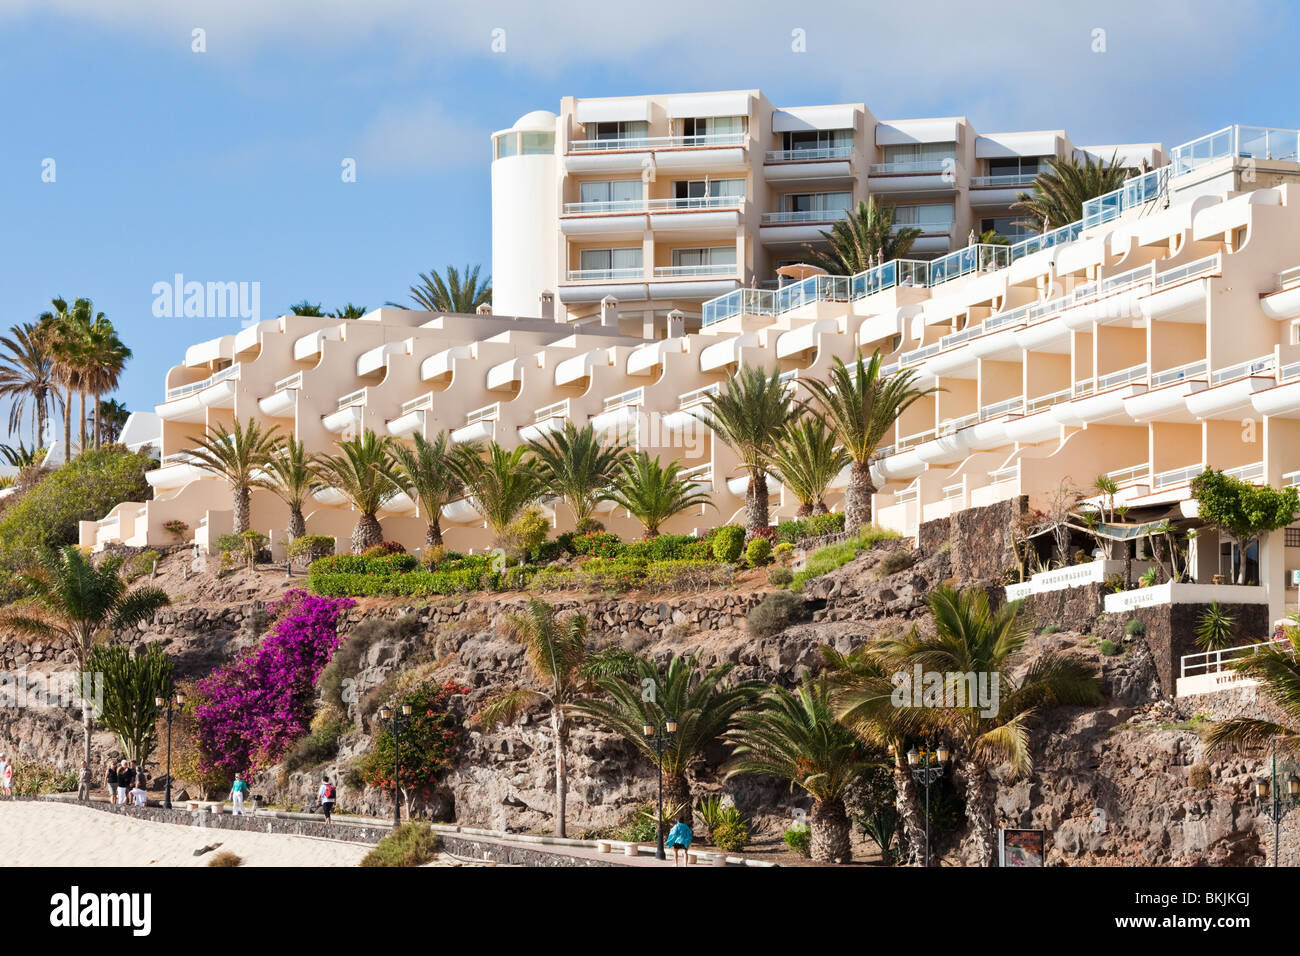 The Riu Palace Hotel facing the beach in the coastal resort of Jandia on the Canary Island of Fuerteventura Stock Photo